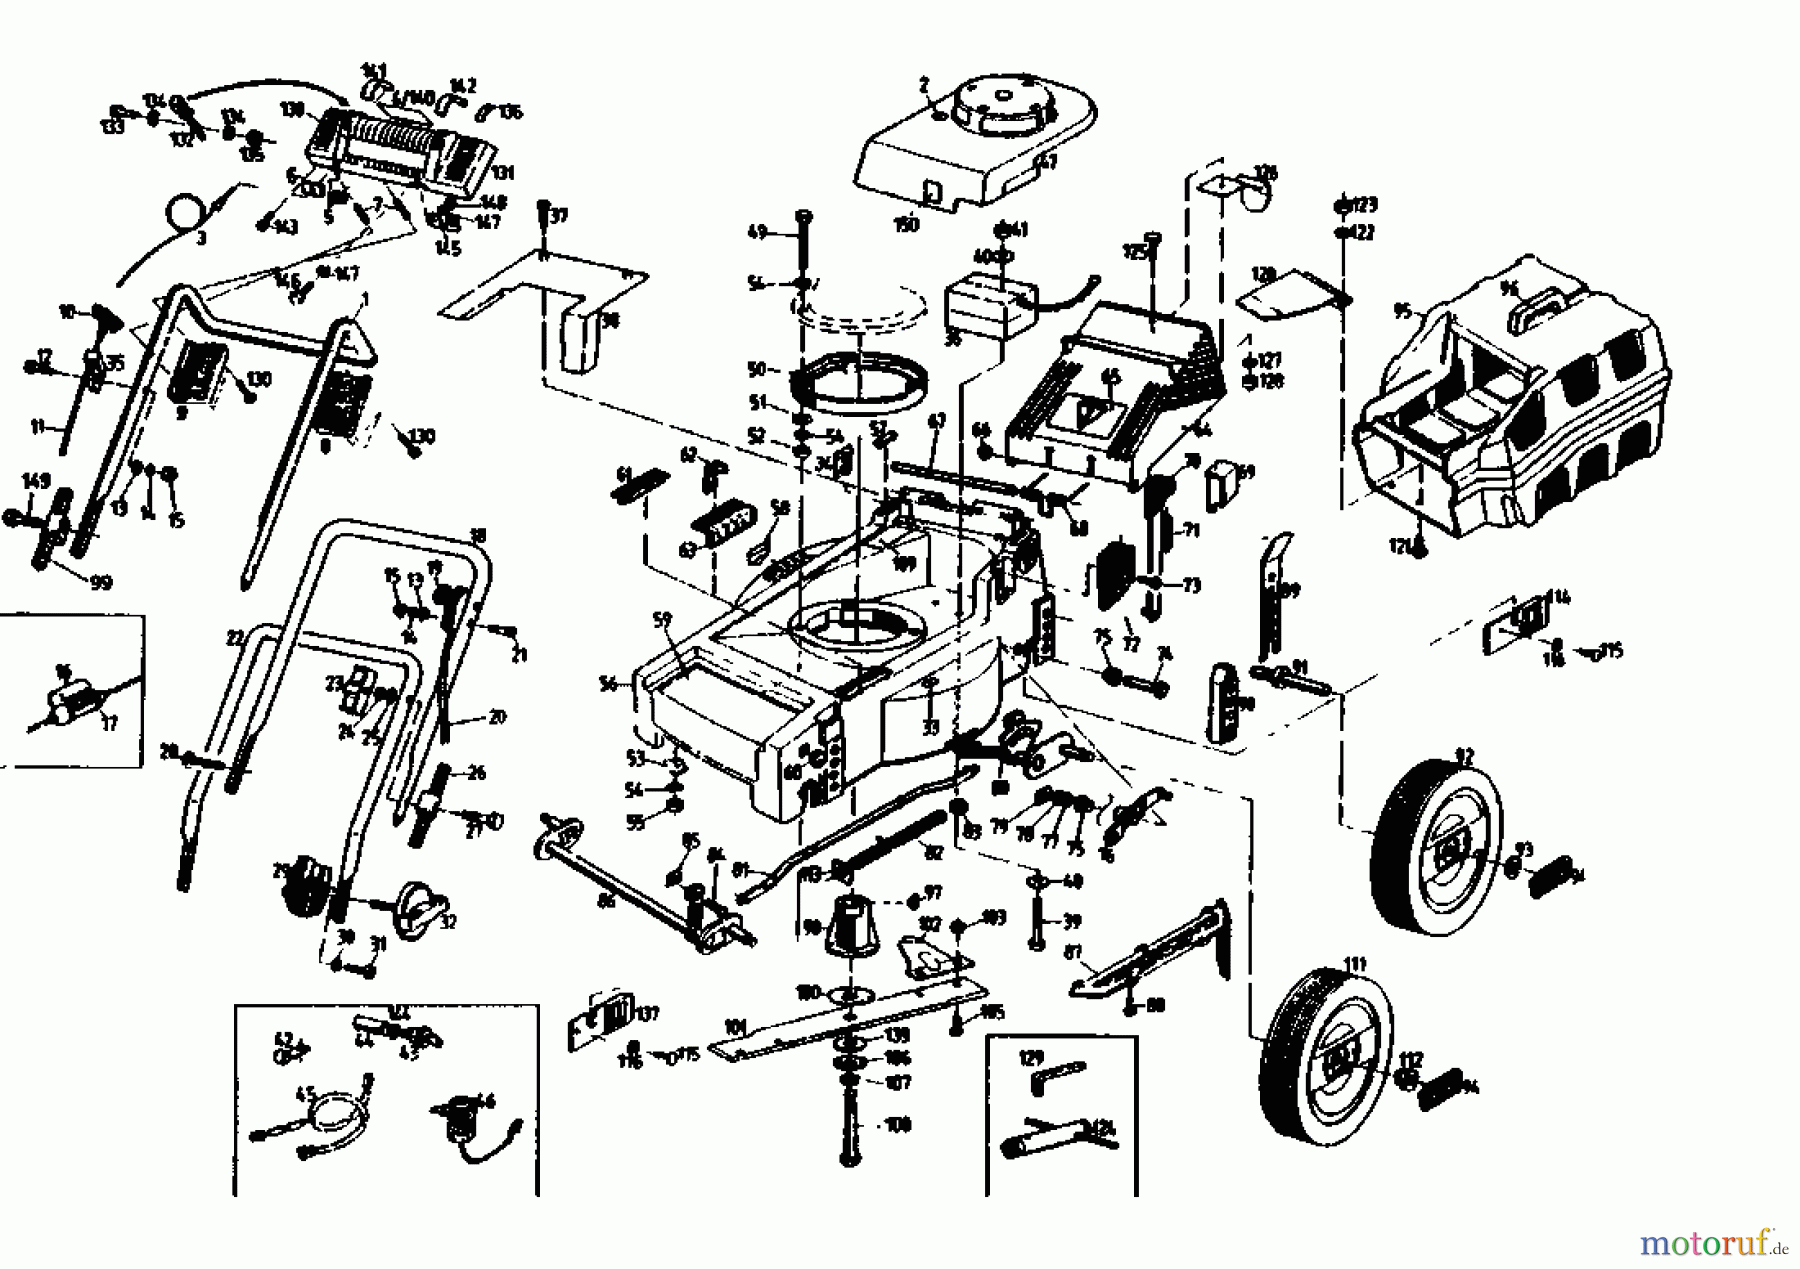  Gutbrod Petrol mower HB 40 02896.01  (1991) Basic machine